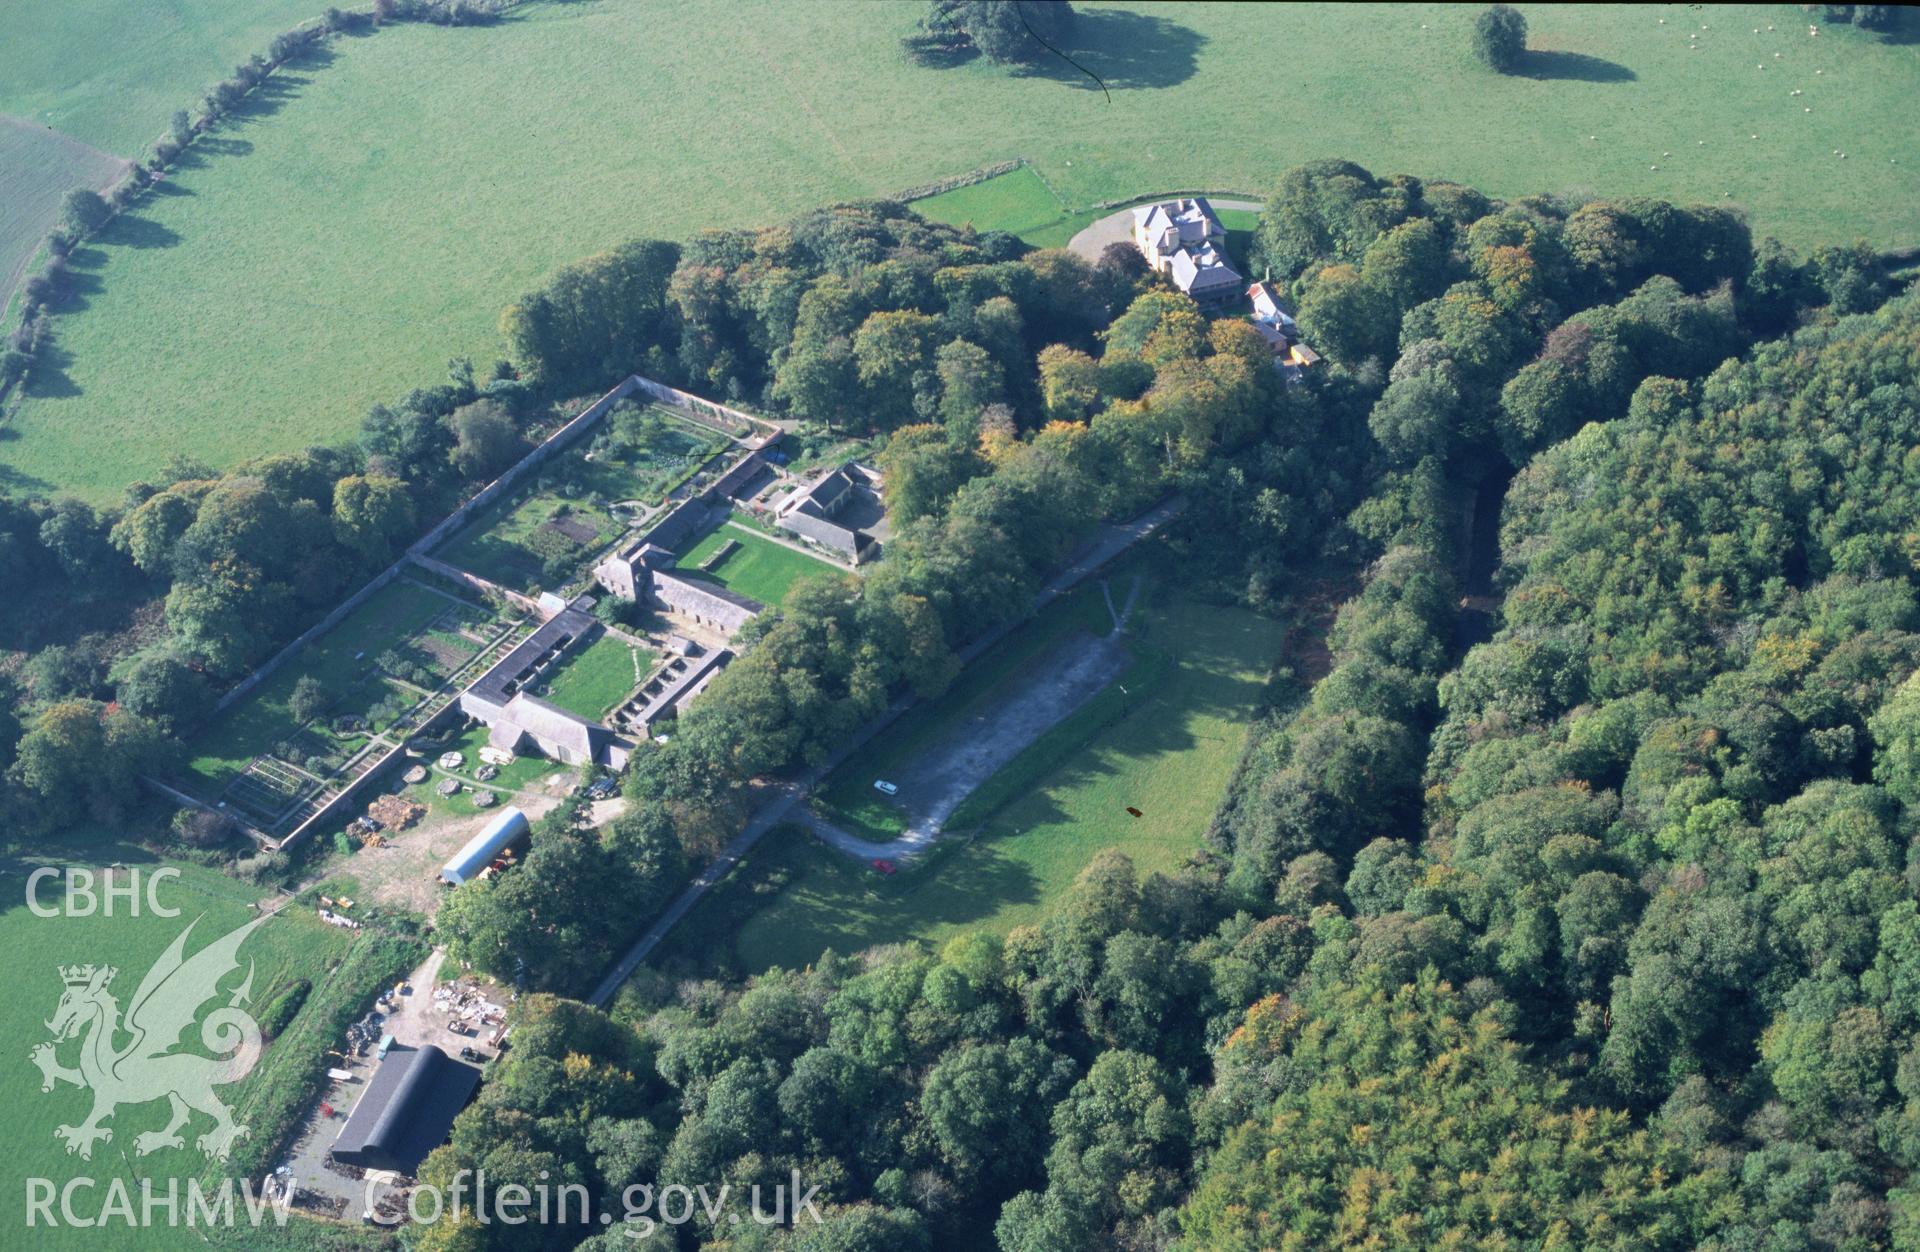 Slide of RCAHMW colour oblique aerial photograph of Llanaeron [llannerchaeron House], taken by T.G. Driver, 19/10/1999.